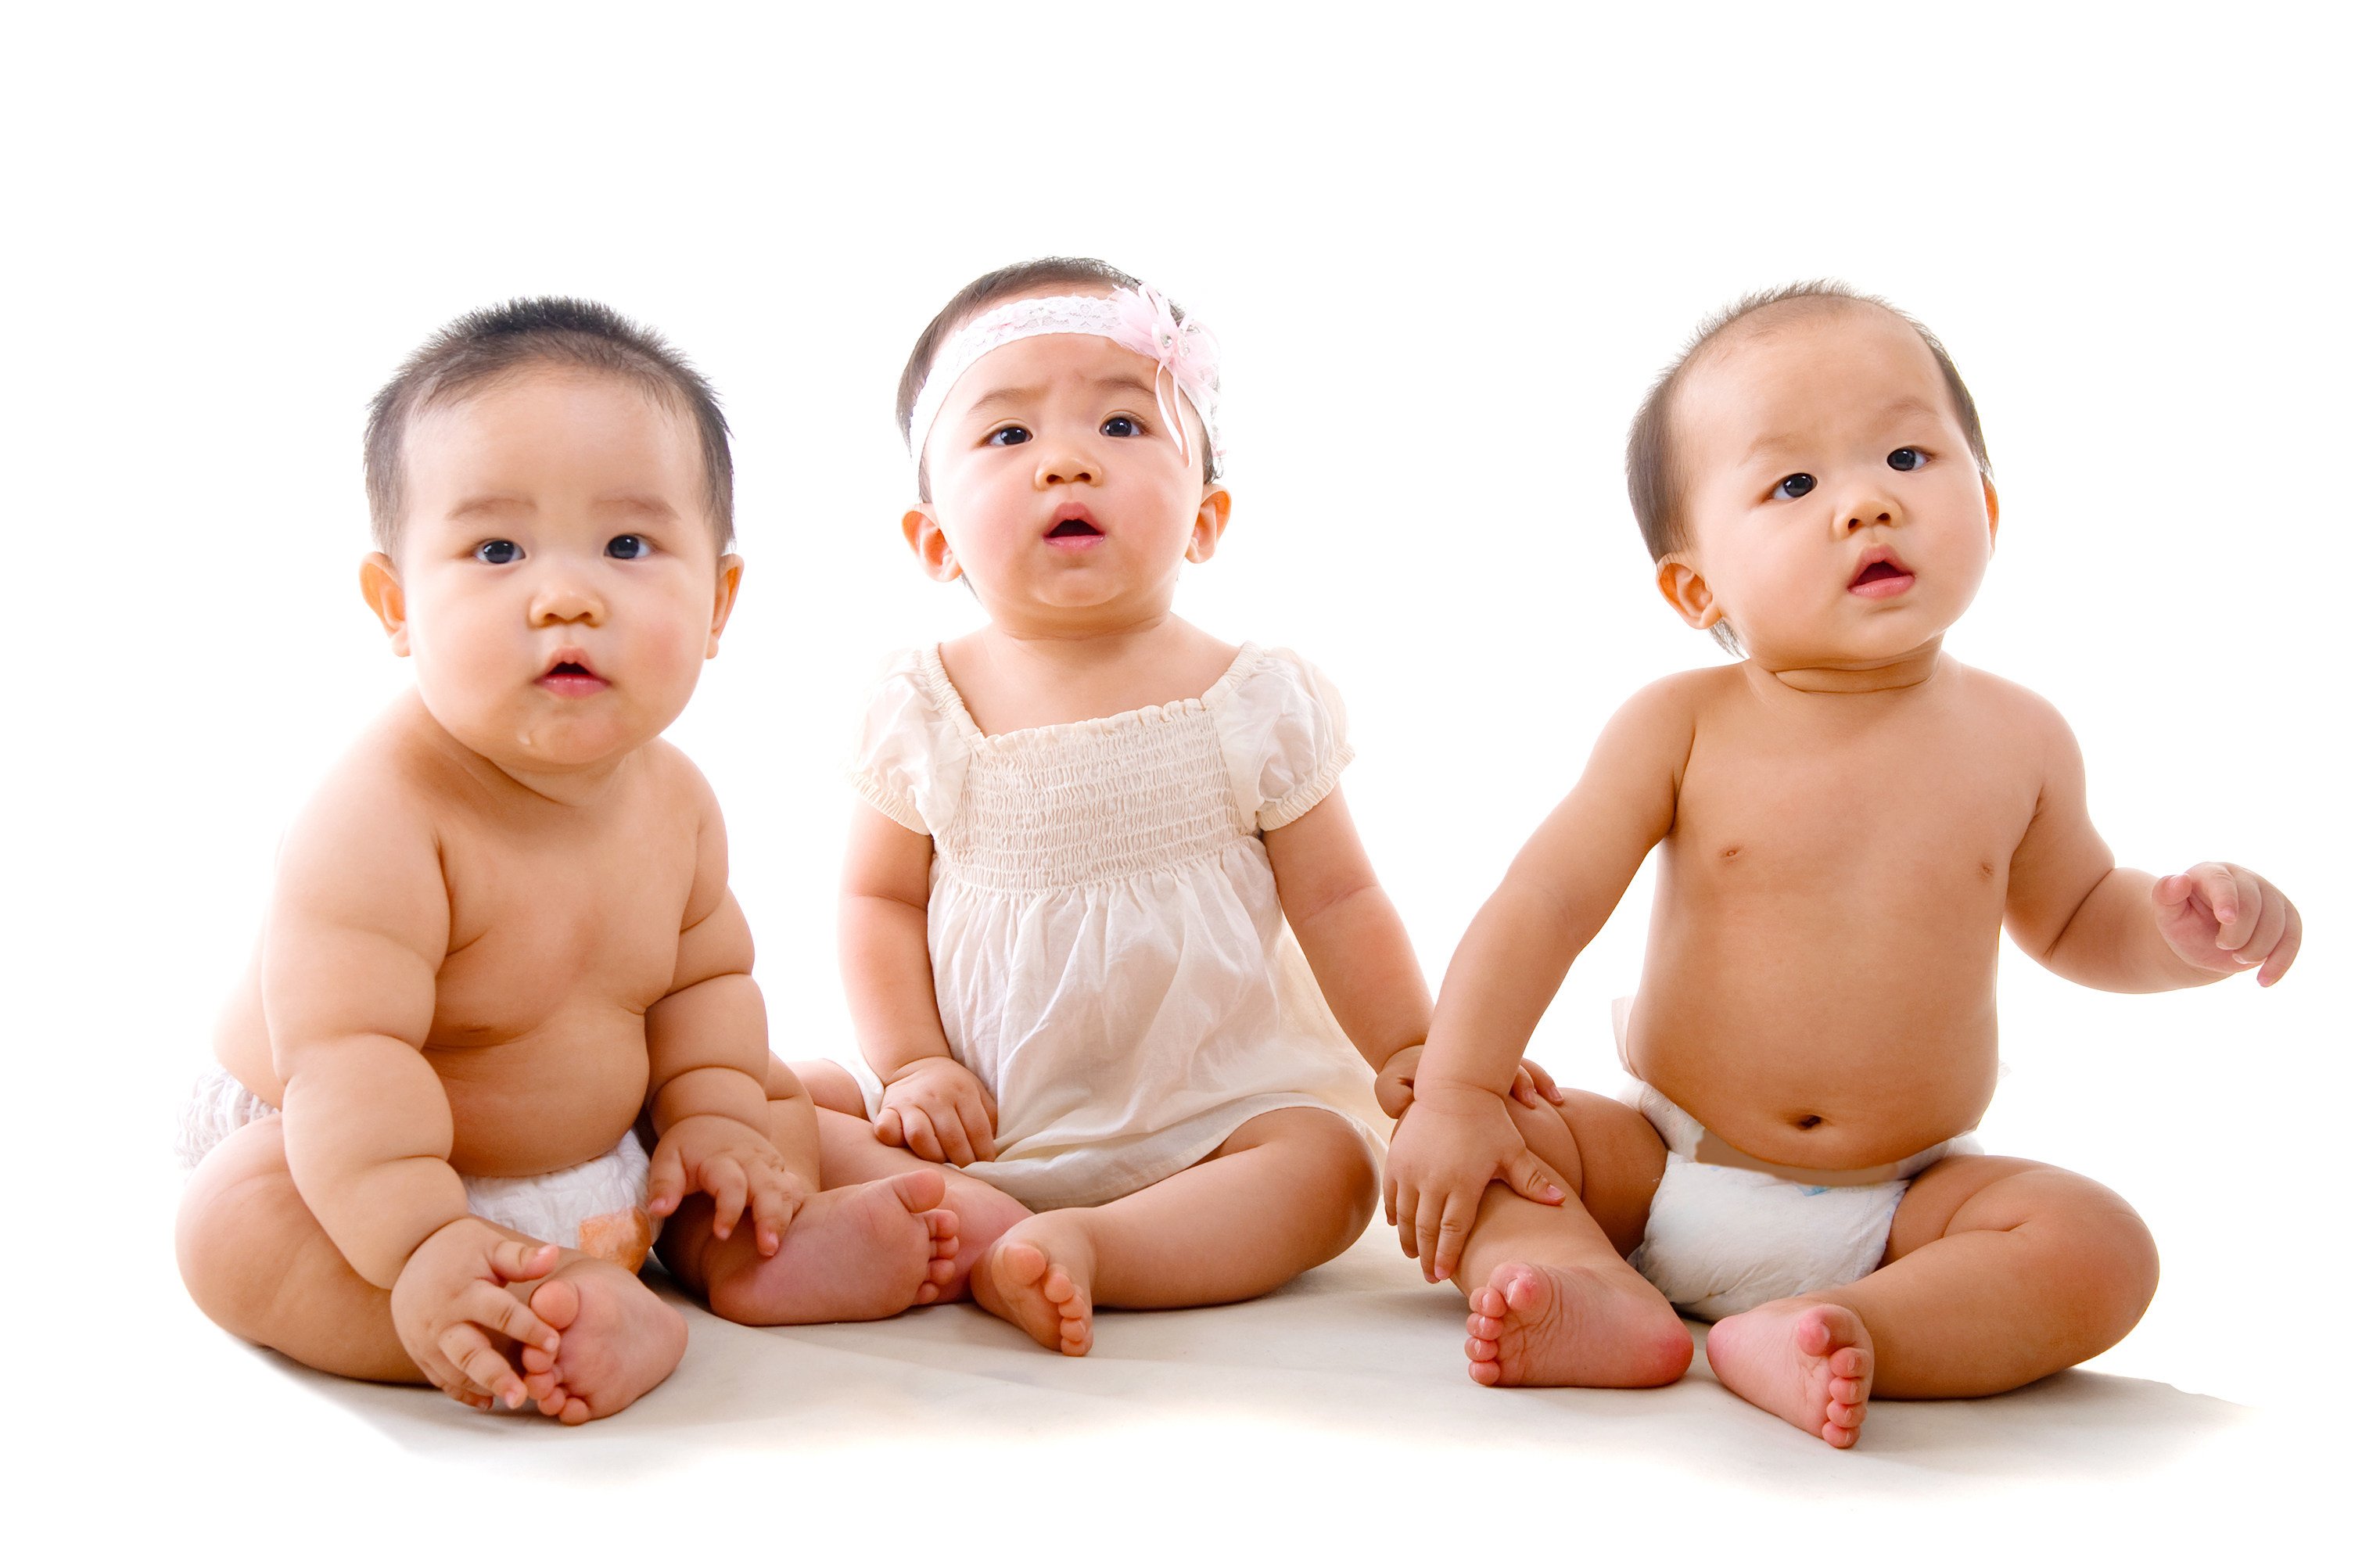 Babies sitting on the floor. Credit: Shutterstock